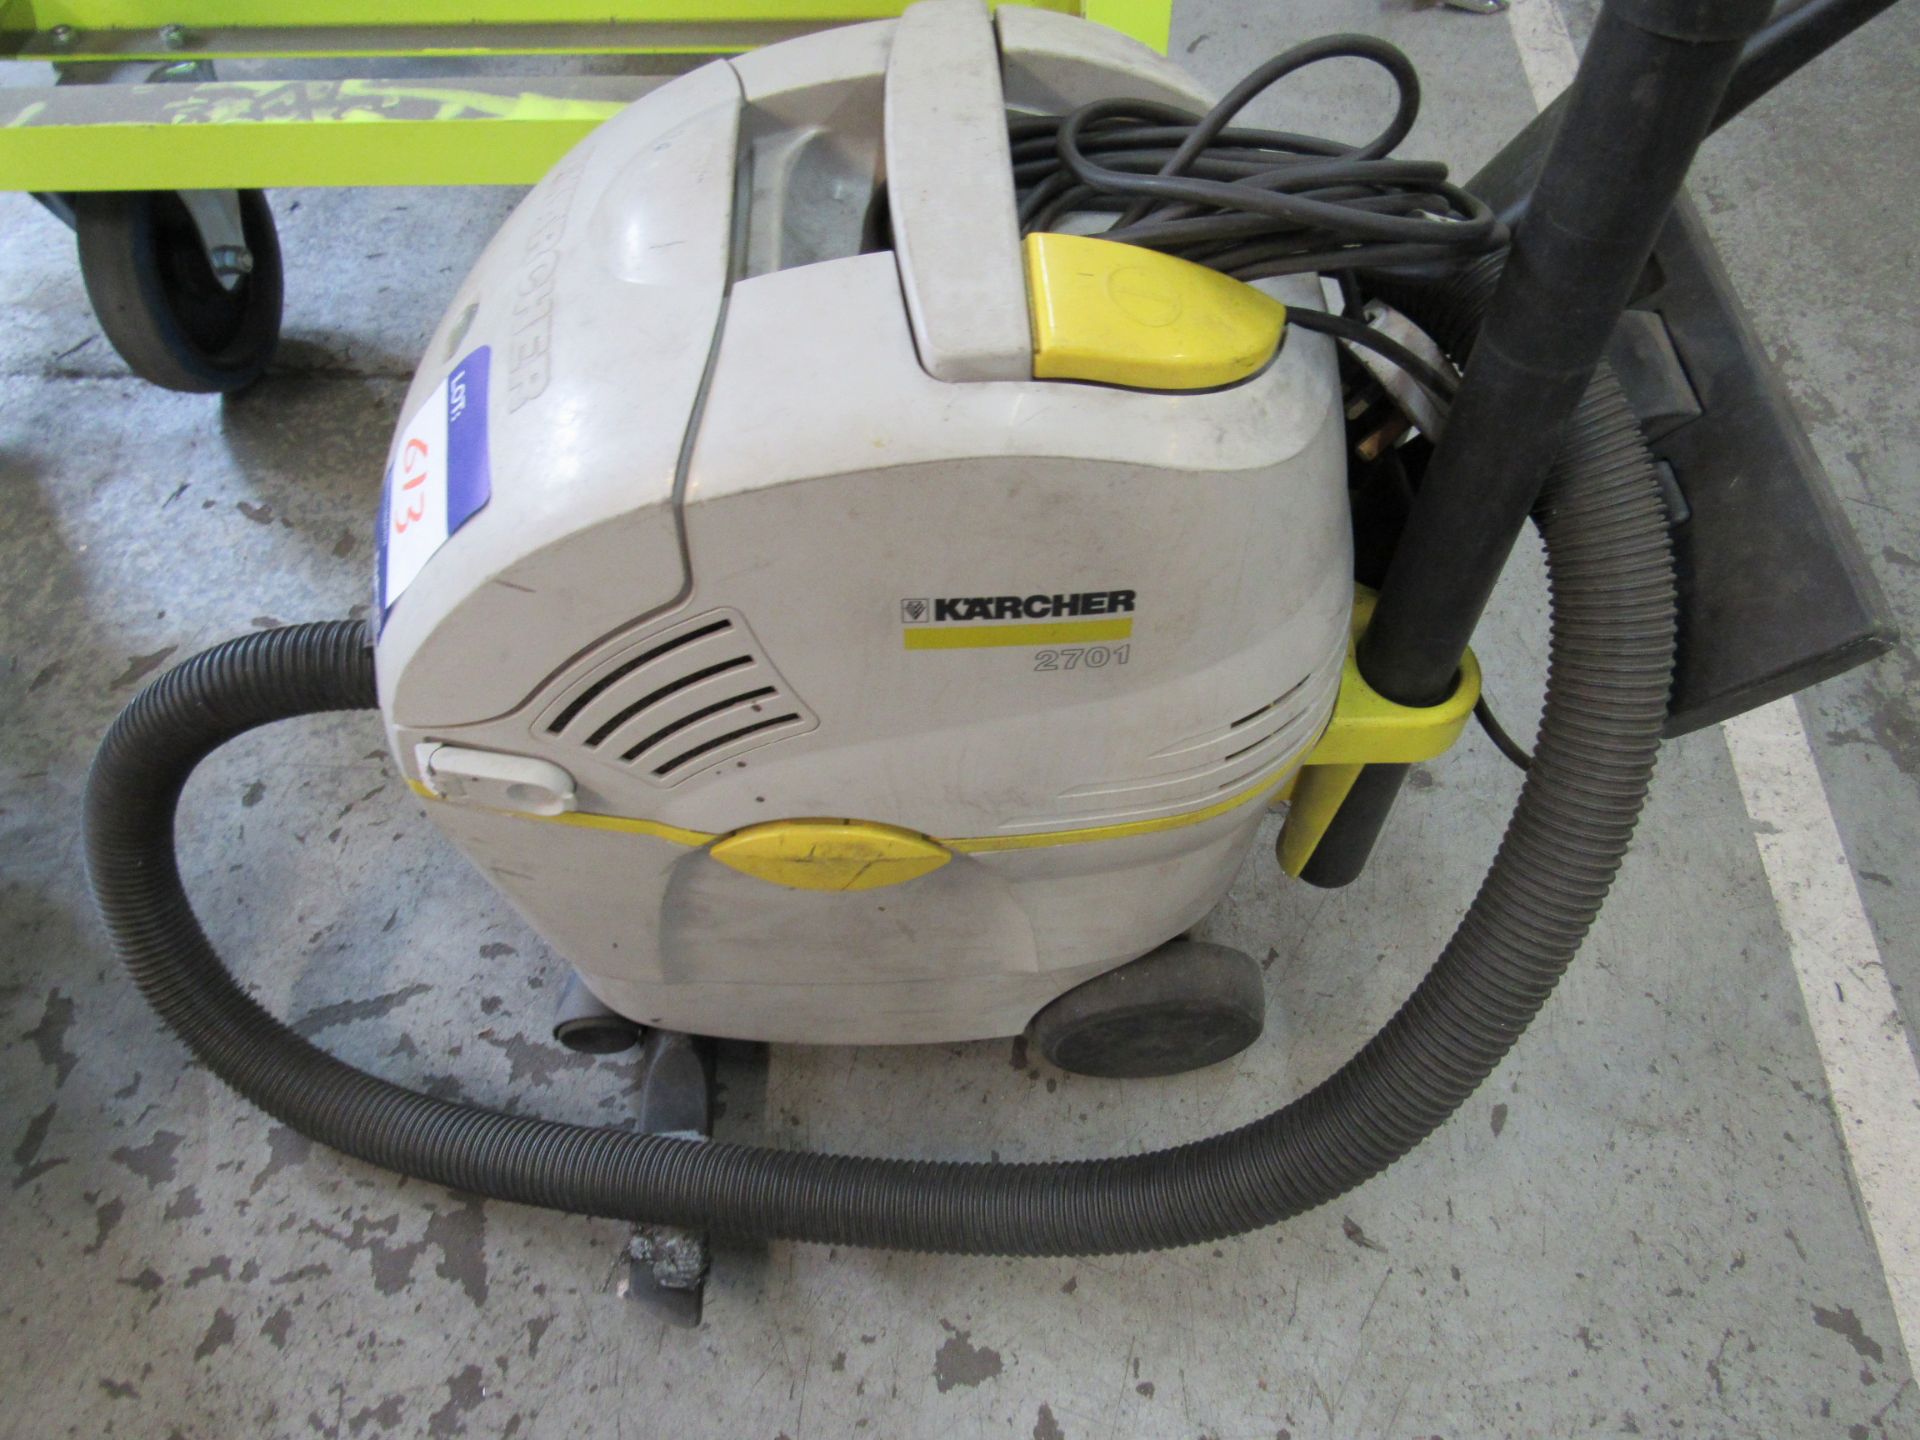 Karcher 2701 wet & dry vacuum - Image 3 of 3